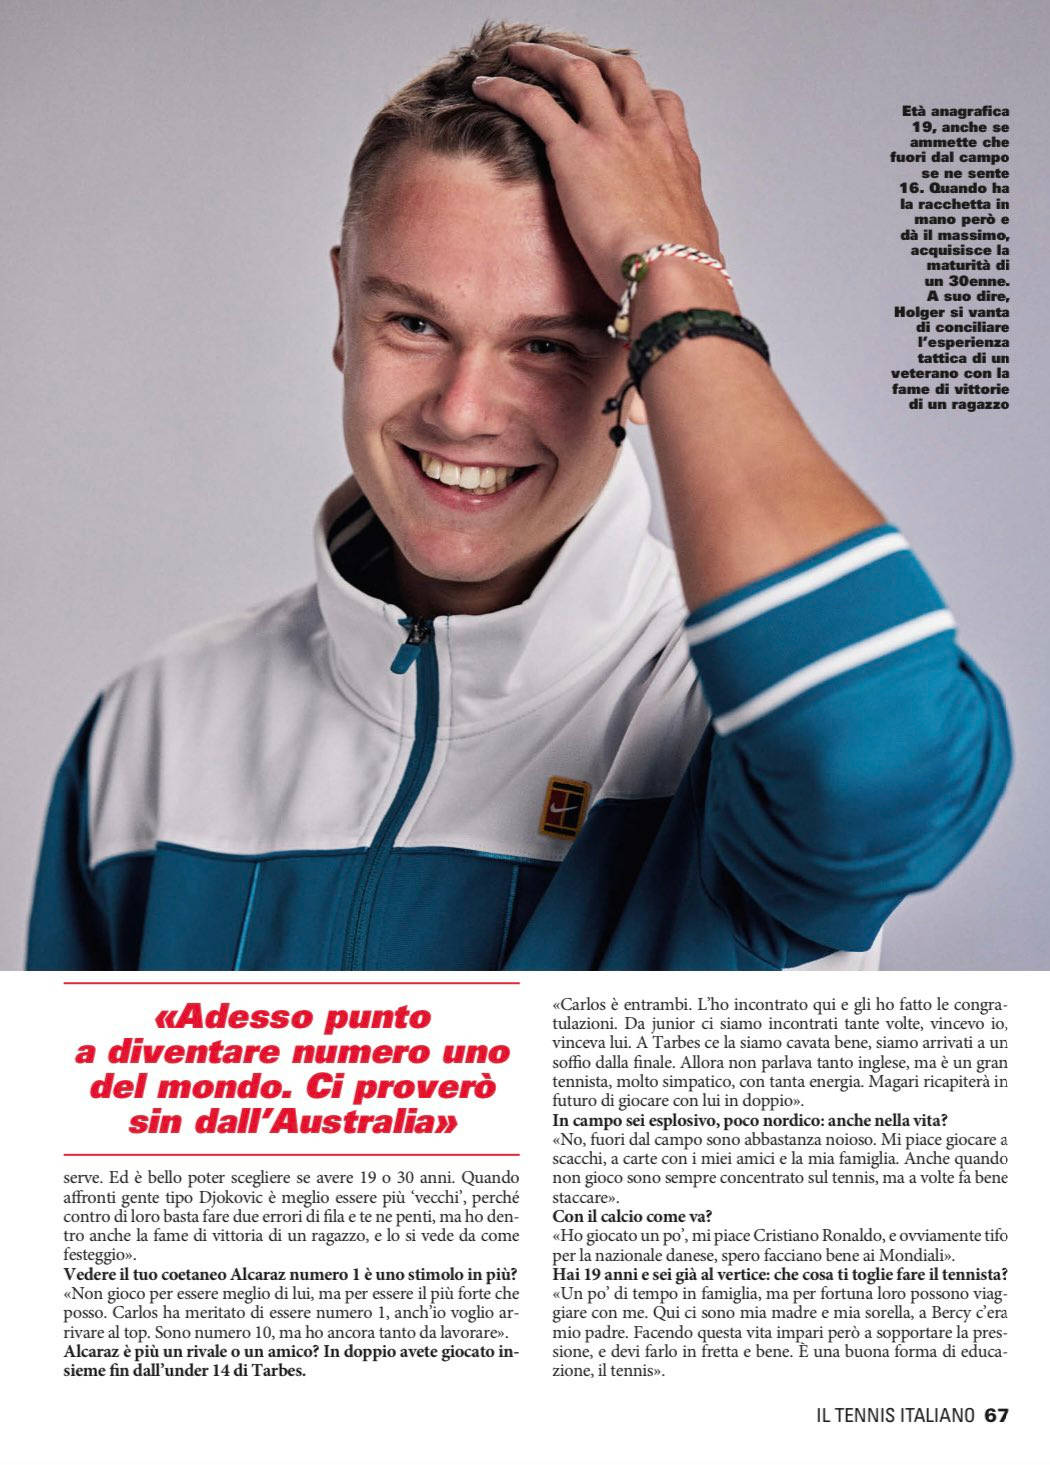 Holger Rune Magazine Interview Wallpaper